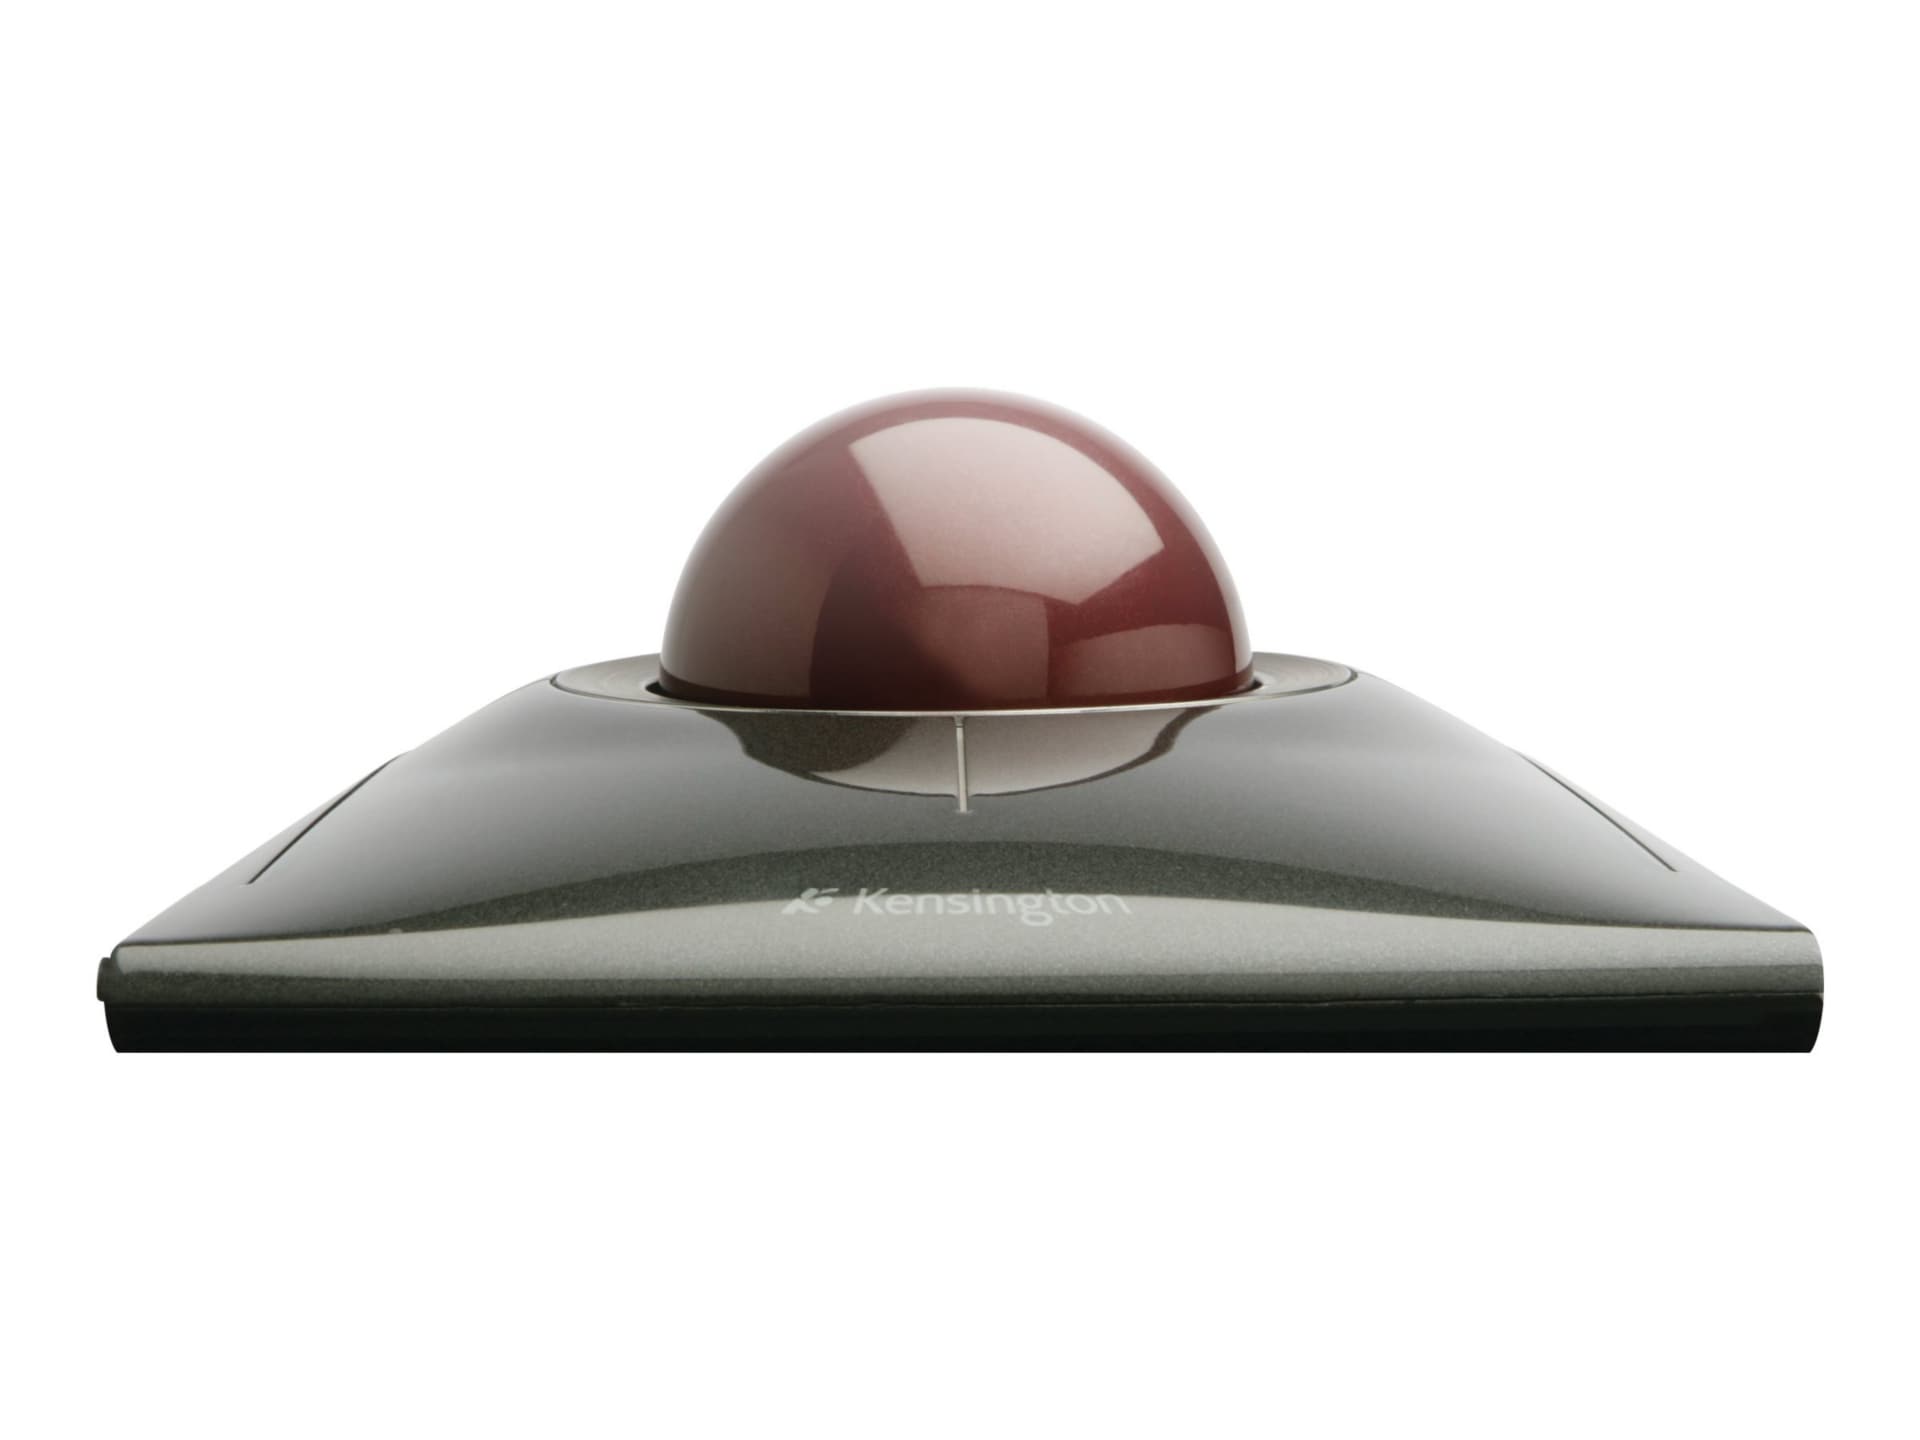 Kensington SlimBlade Trackball - boule de commande - USB - graphite, Rouge rubis